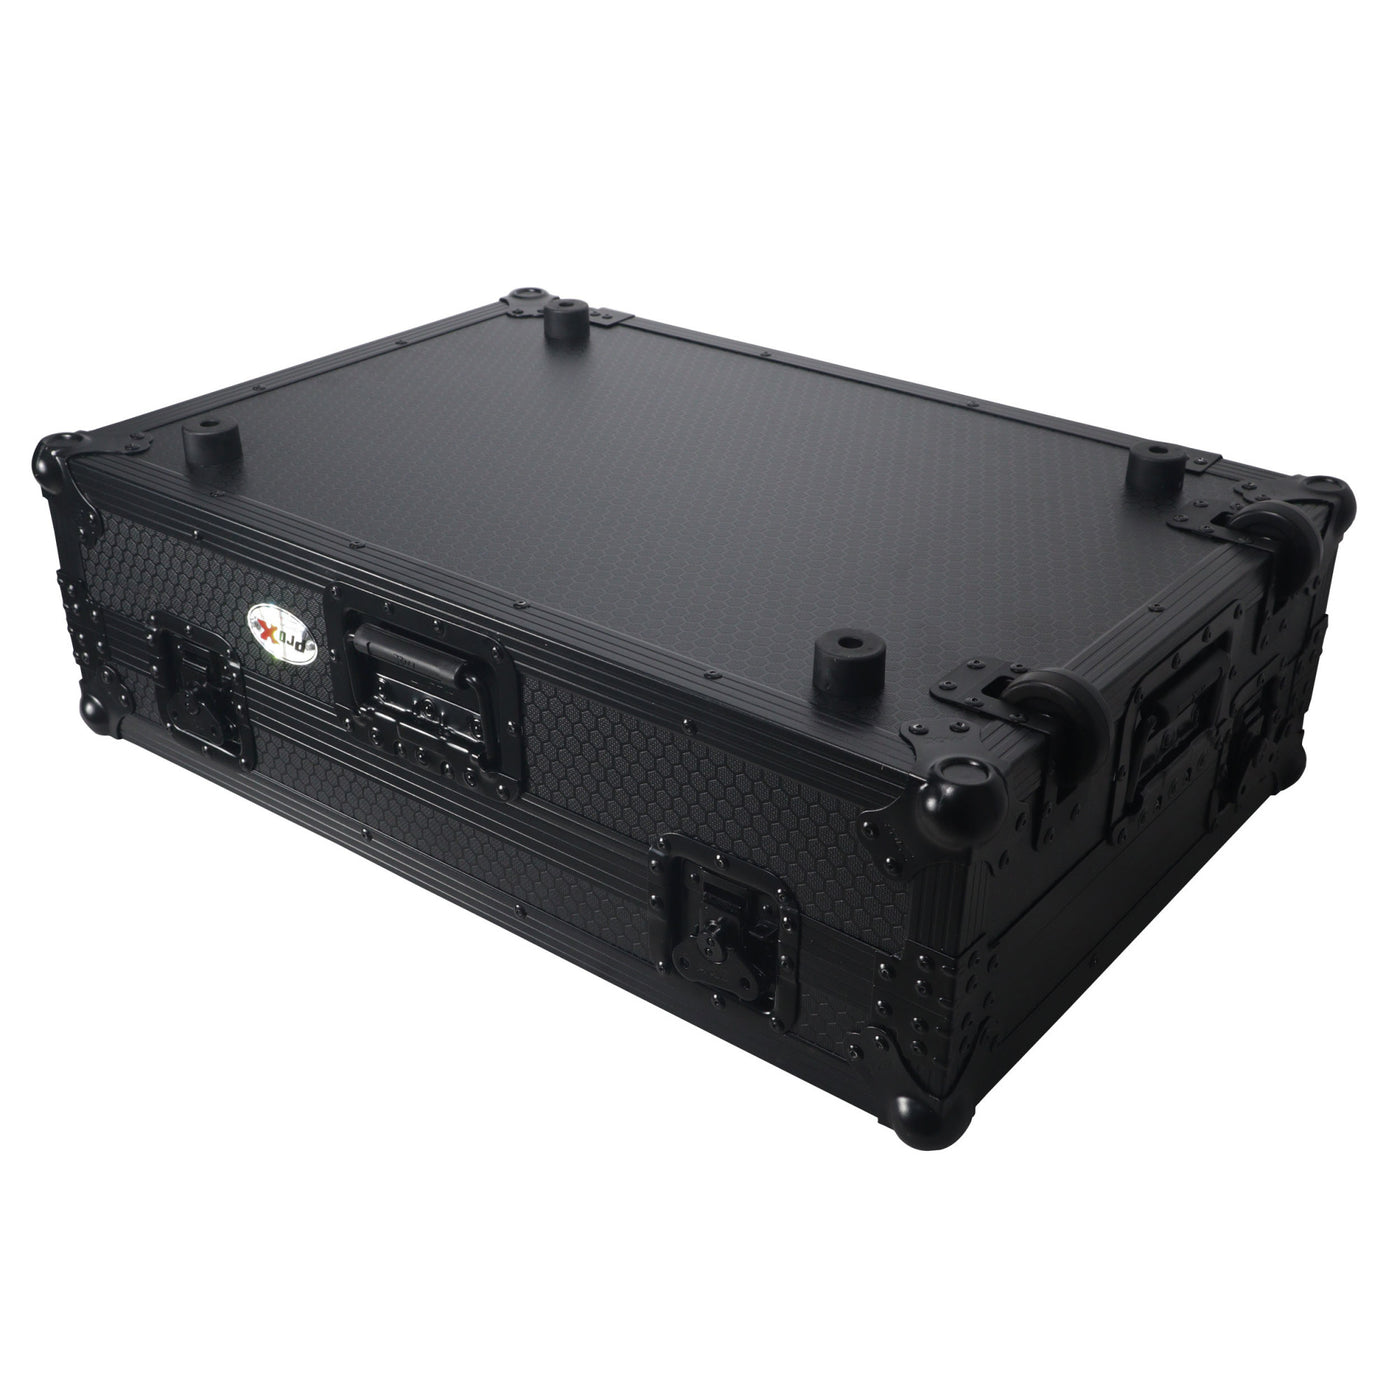 ProX XS-RANEONEWBL ATA-300 Style Flight Case, For RANE ONE DJ Controller, With 1U Rack and Wheels, Pro Audio Equipment Storage, Black/Black